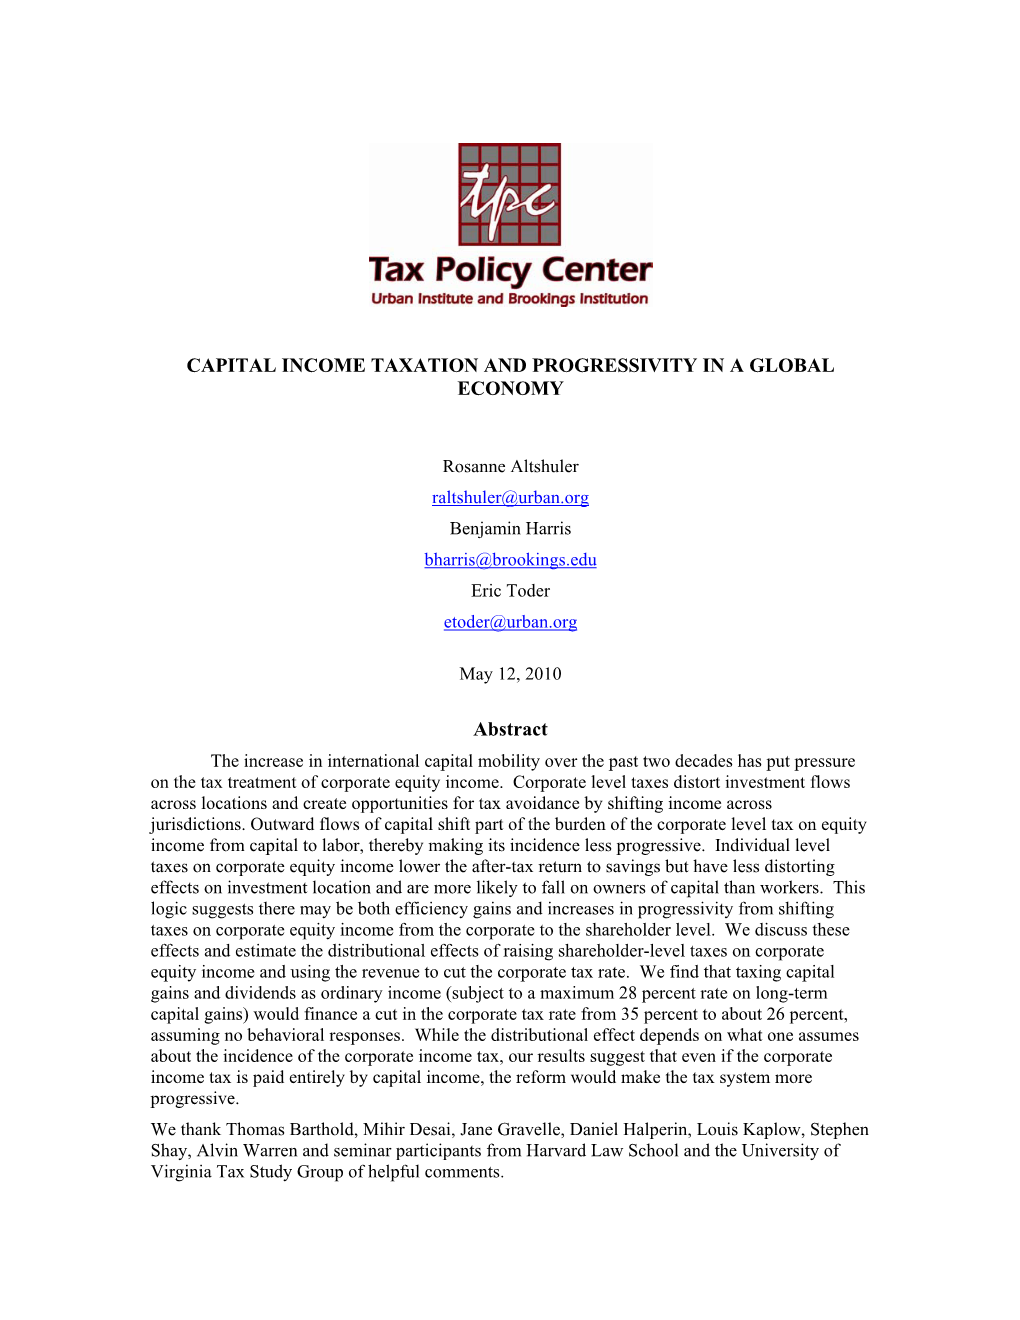 Capital Income Taxation and Progressivity in a Global Economy